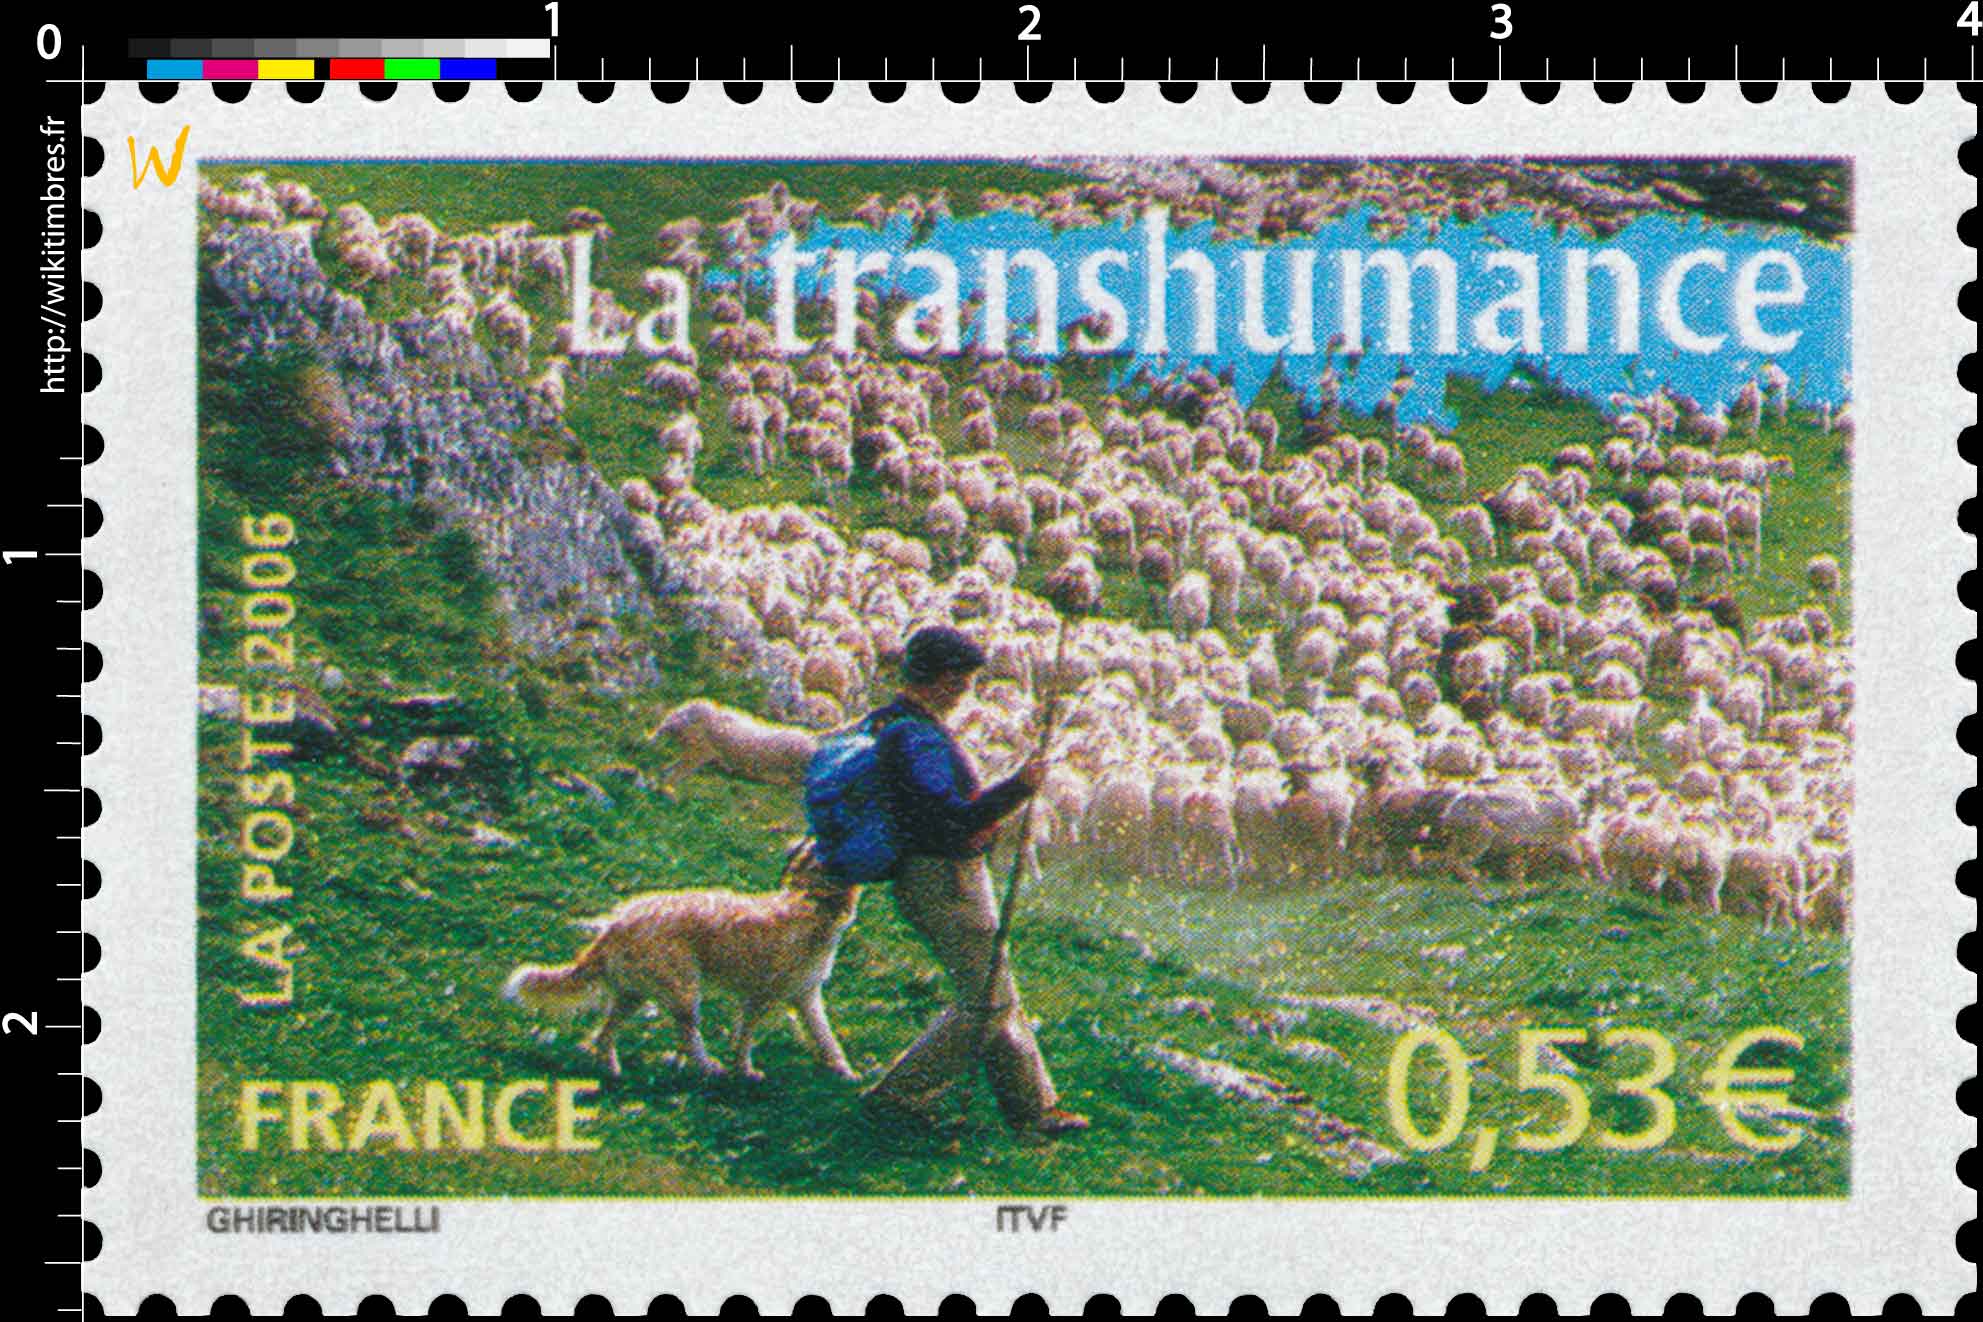 2006 La transhumance